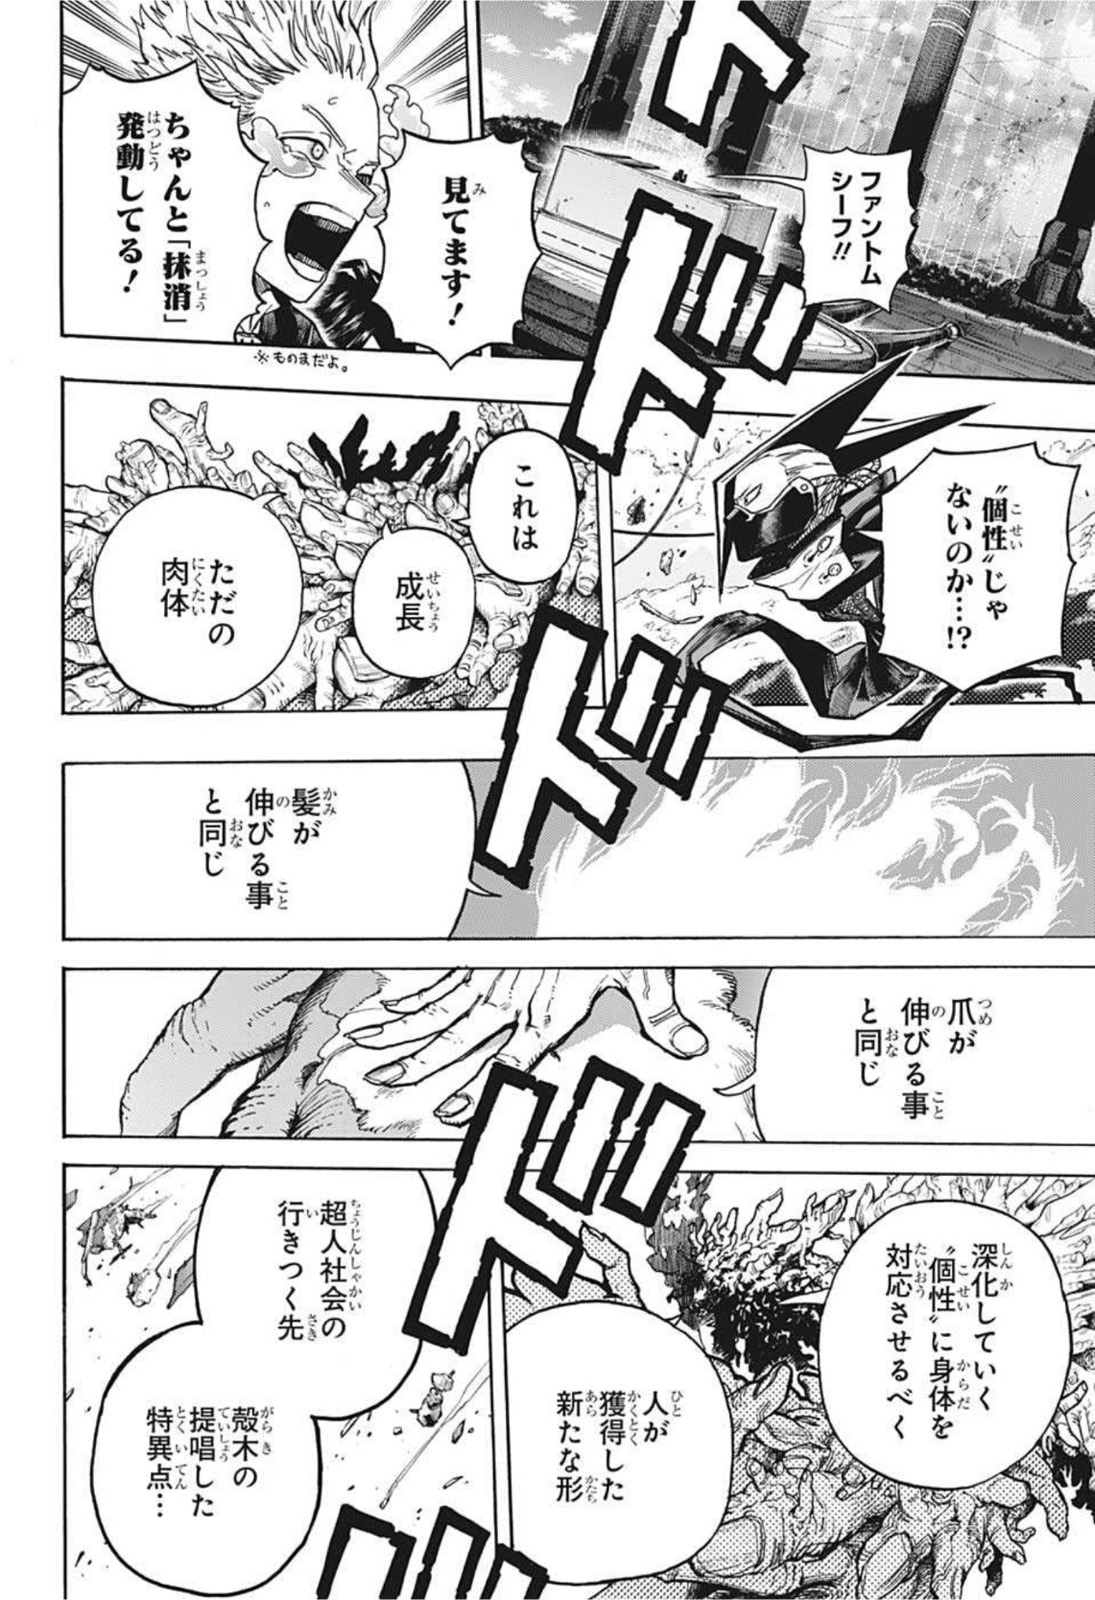 Boku no Hero Academia - Chapter 347 - Page 2